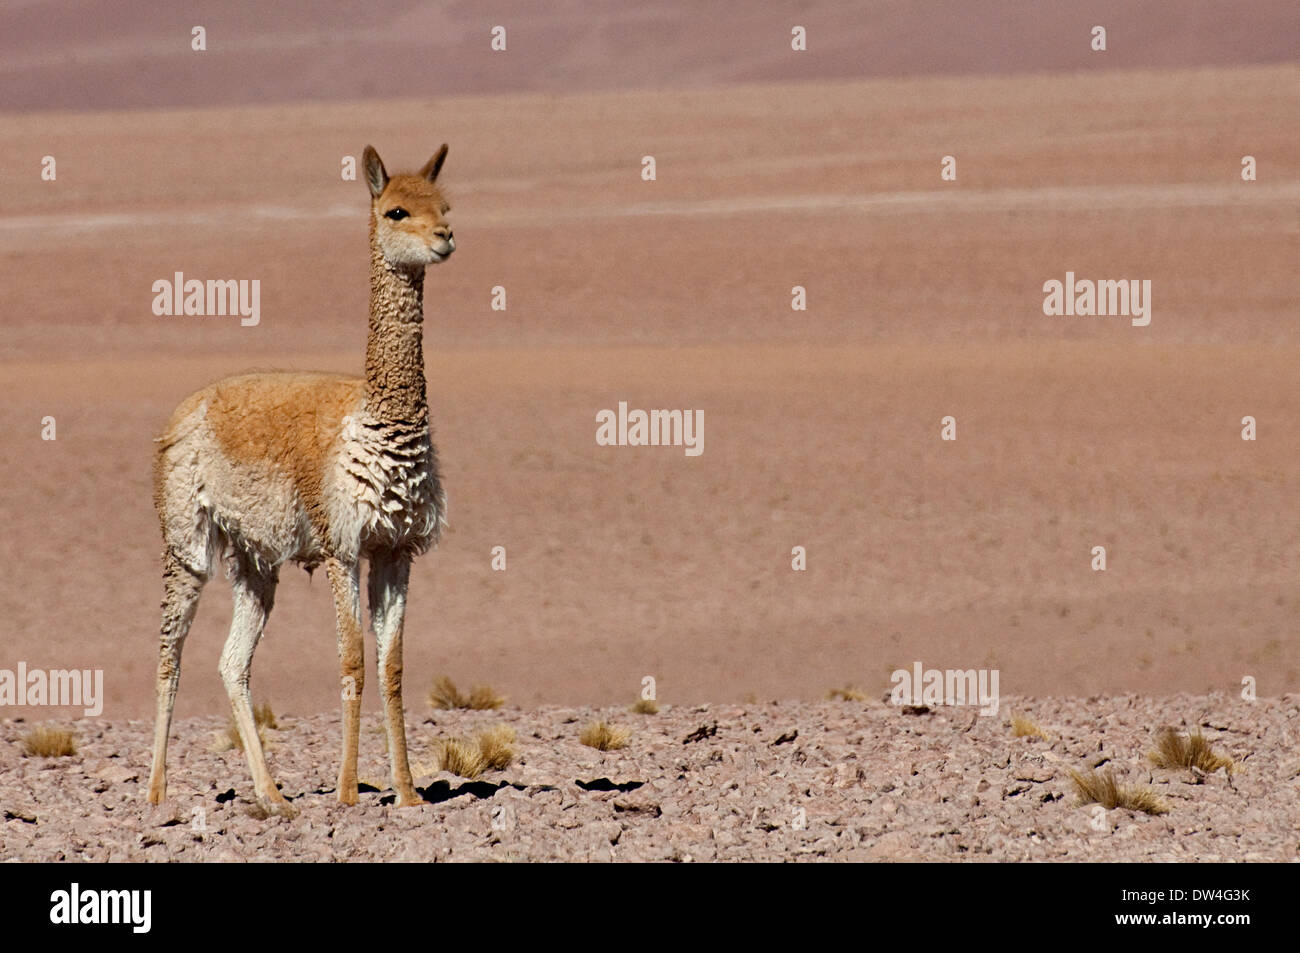 A vicuña (Vicugna vicugna) or vicugna, a wild South American camelid, in the Atacama Desert, Chile, South America Stock Photo